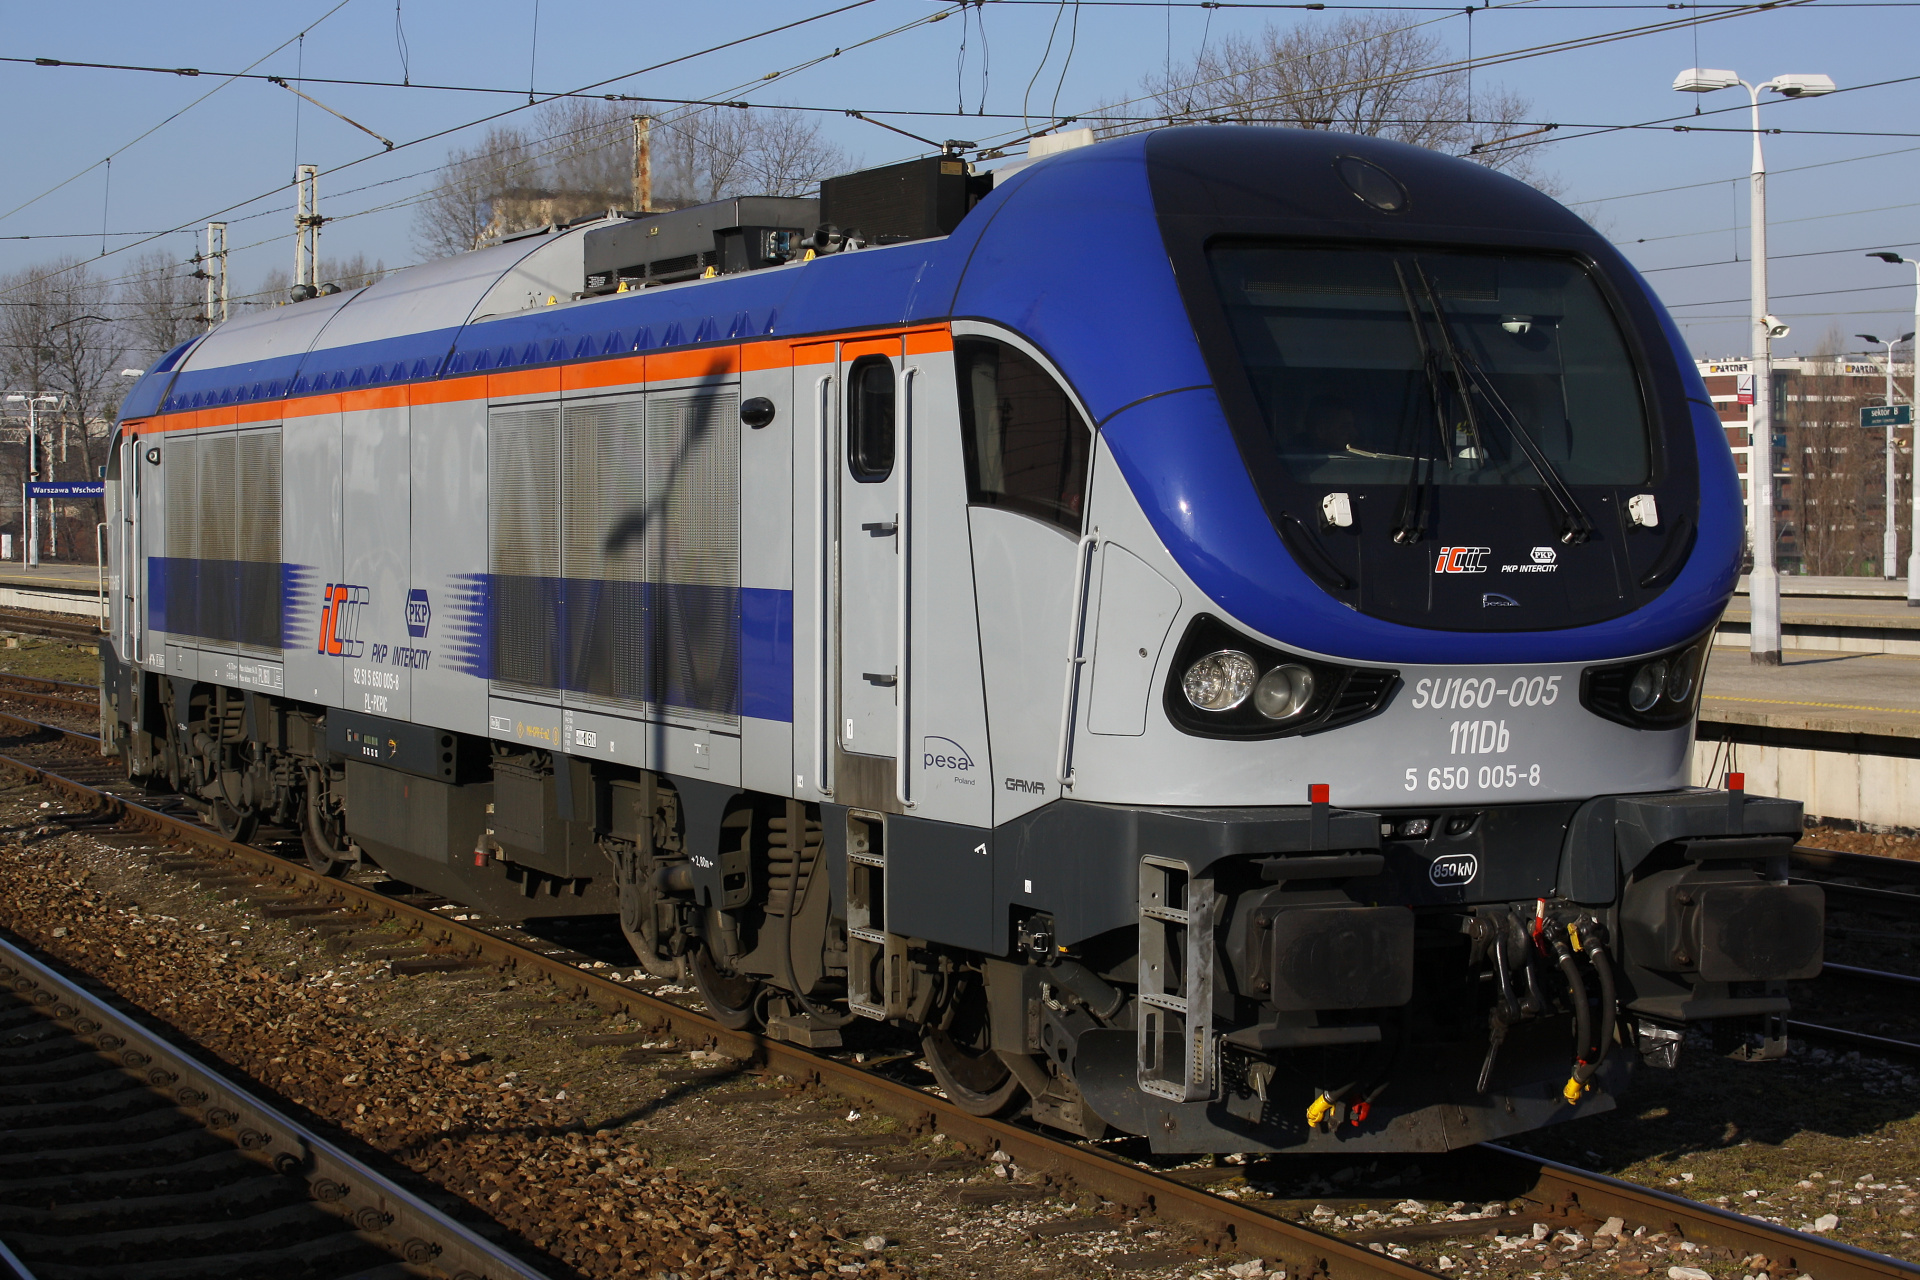 111Db SU160-005 (Vehicles » Trains and Locomotives » Pesa Gama)